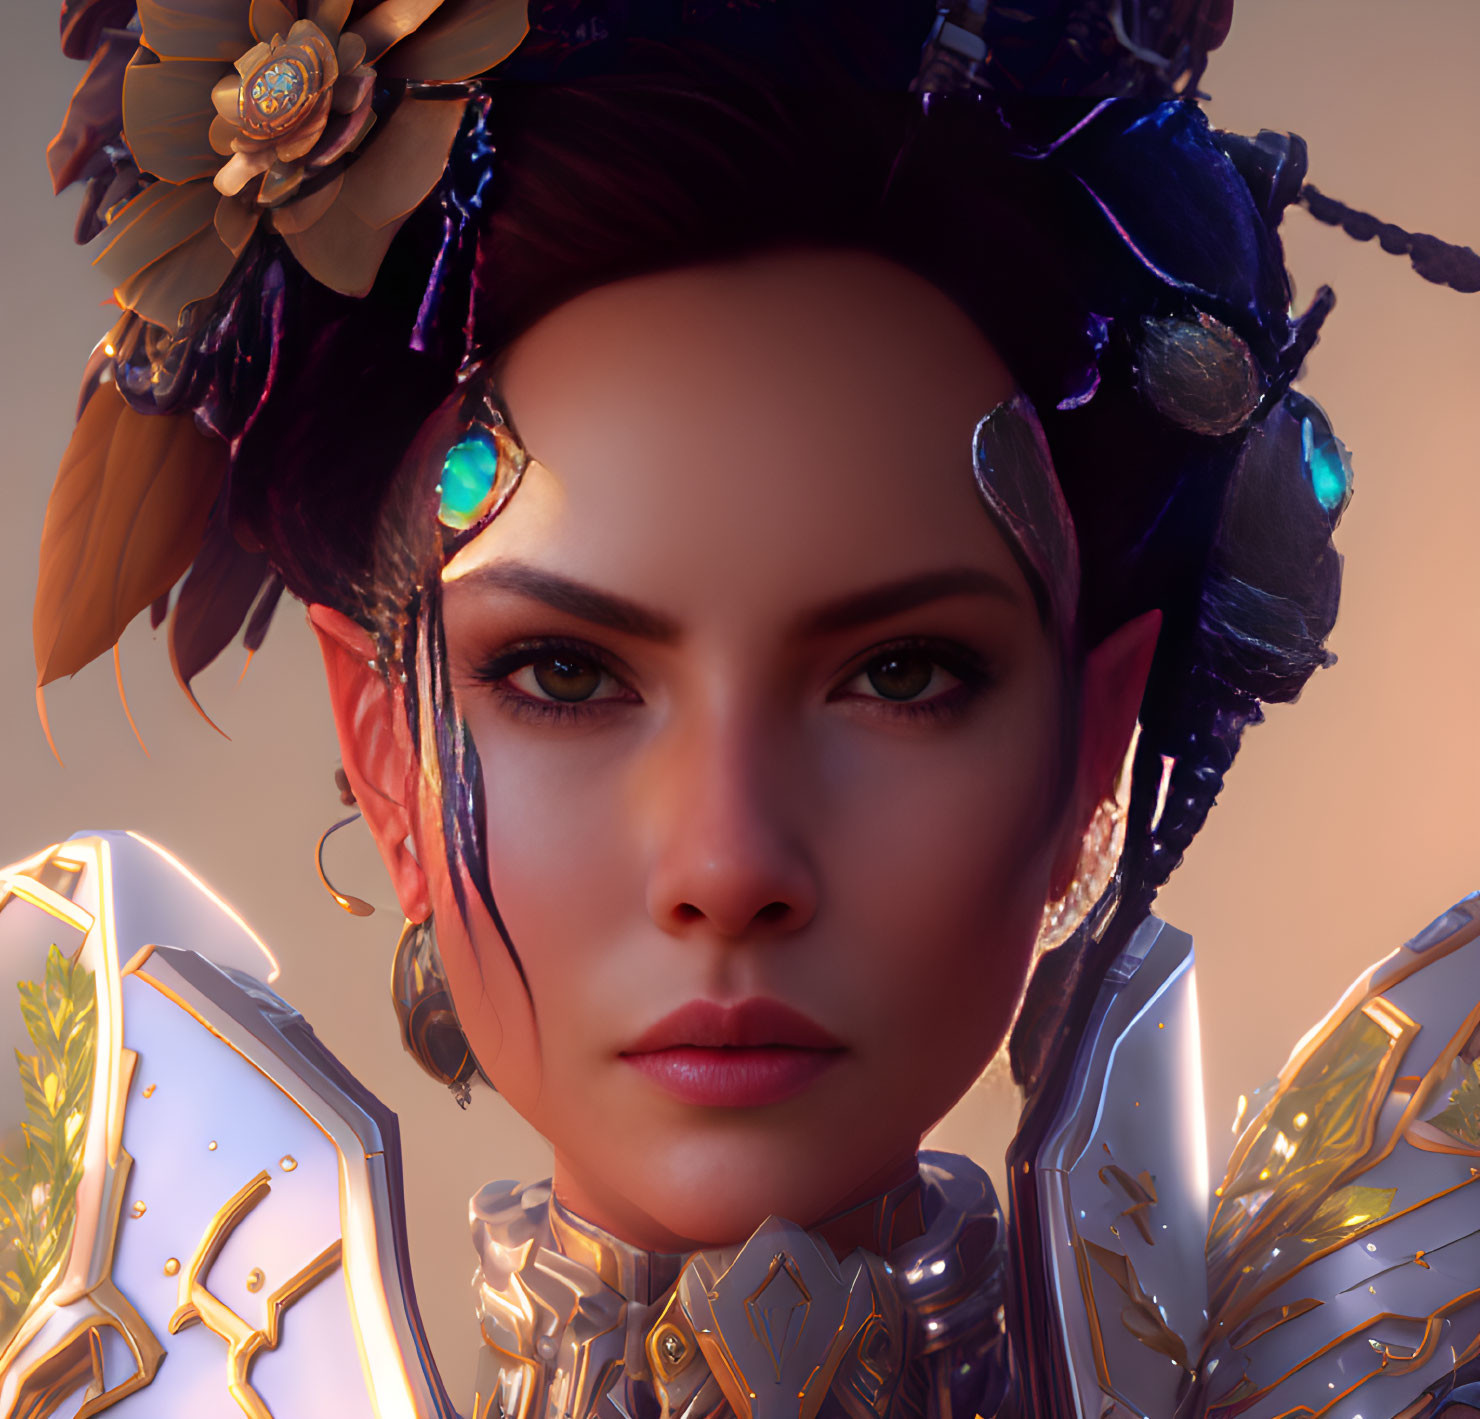 Fantasy female warrior digital artwork with decorated armor and ornate headdress